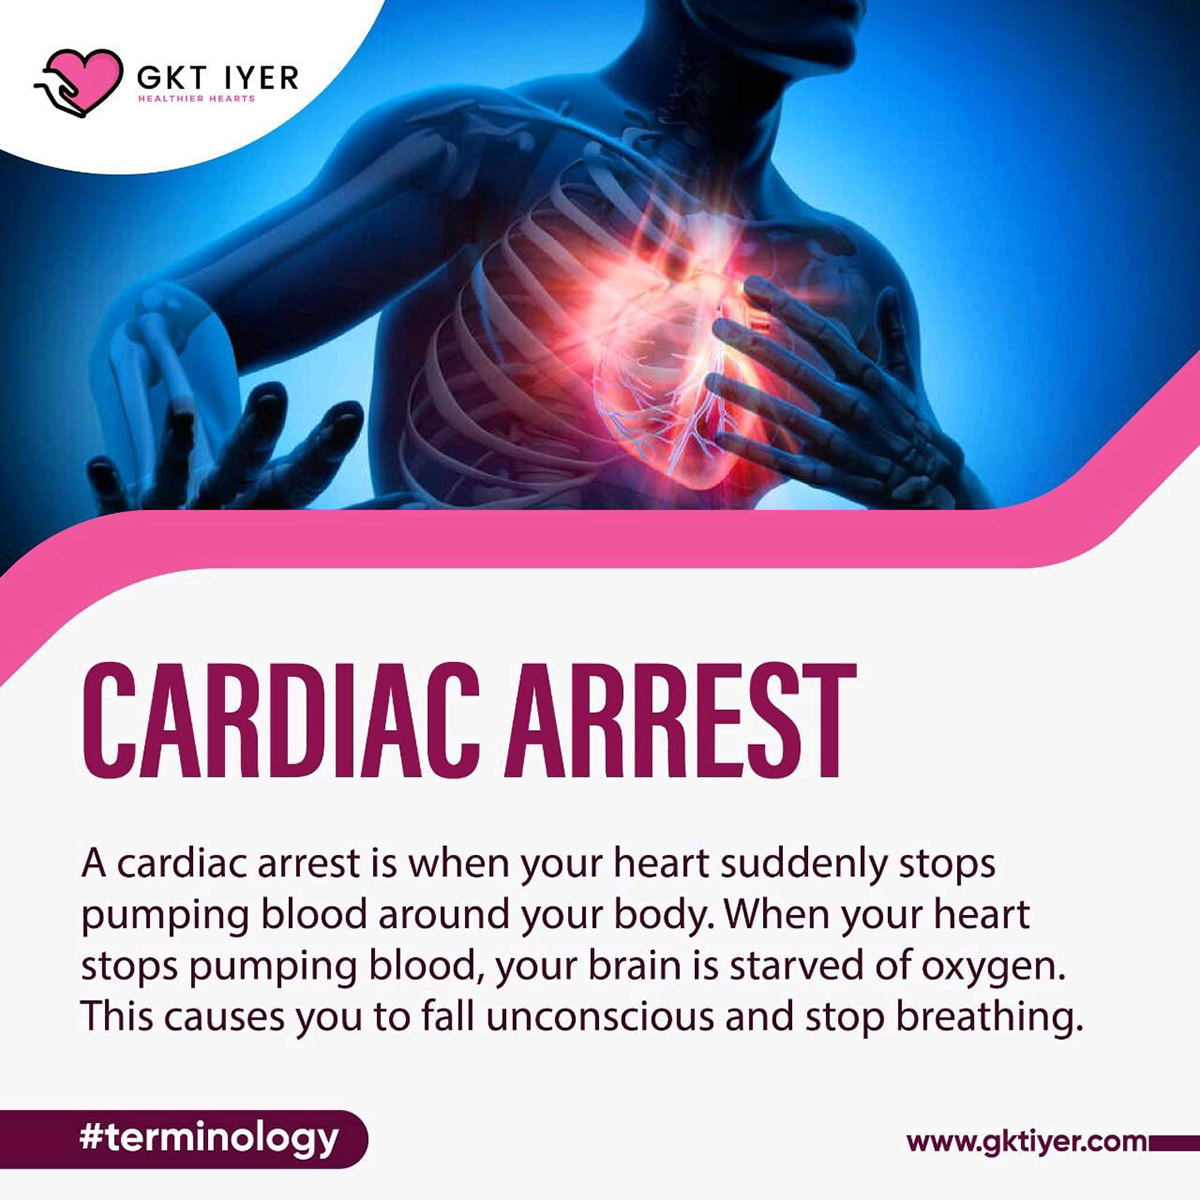 cardiacarrest GKT healthyliving heart heartattack HeartDisease hearthealth terminology